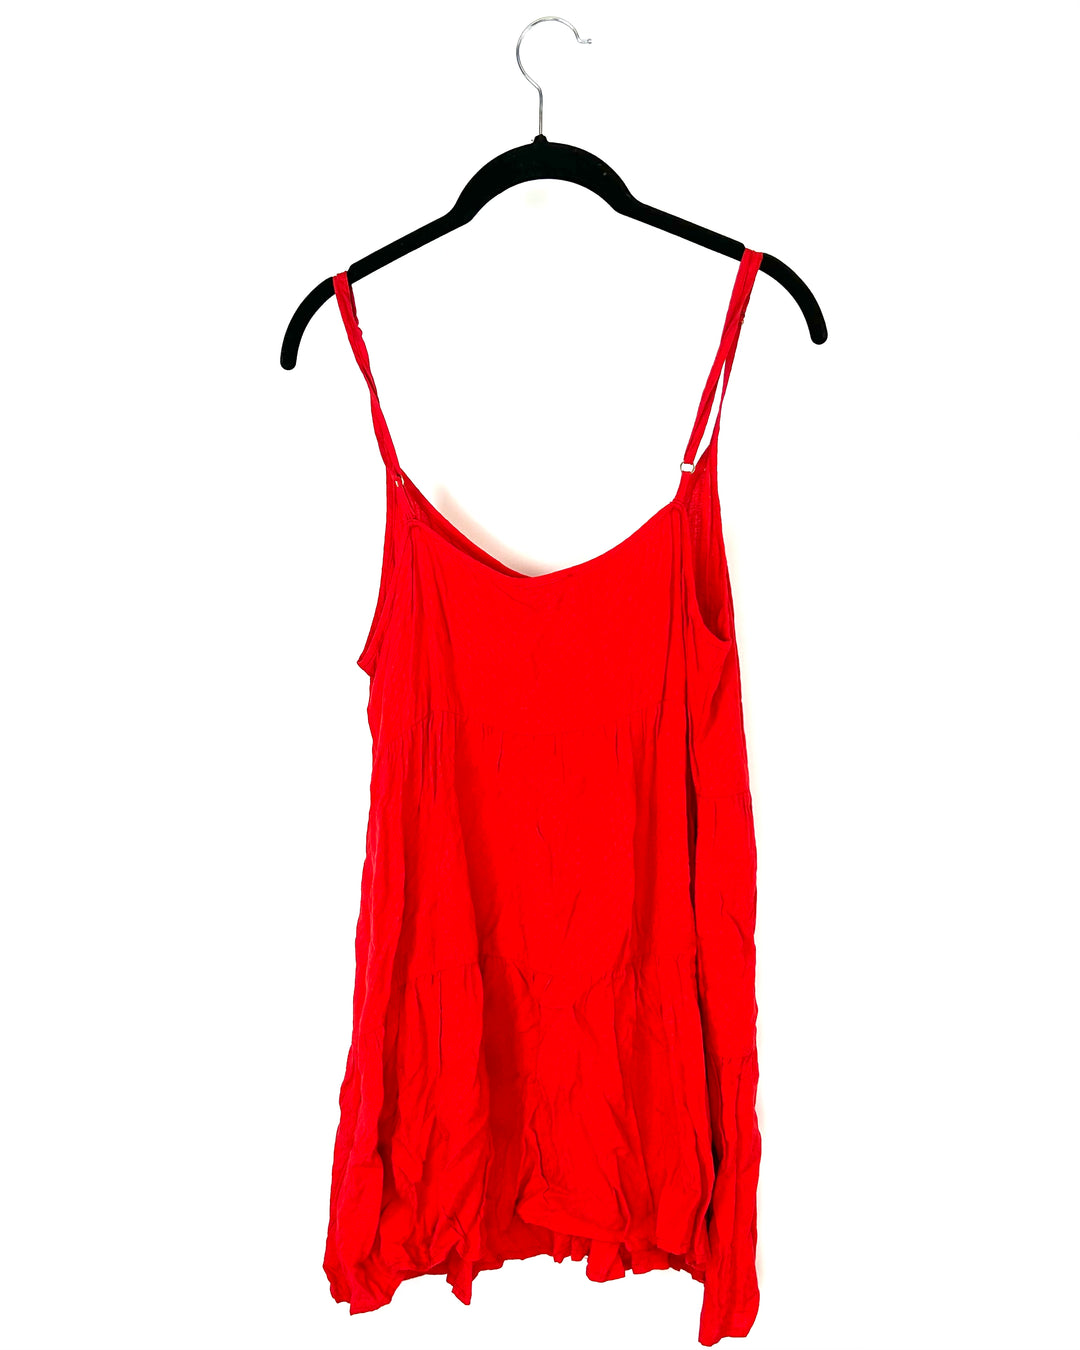 Bright Red Sleeveless Dress - Small